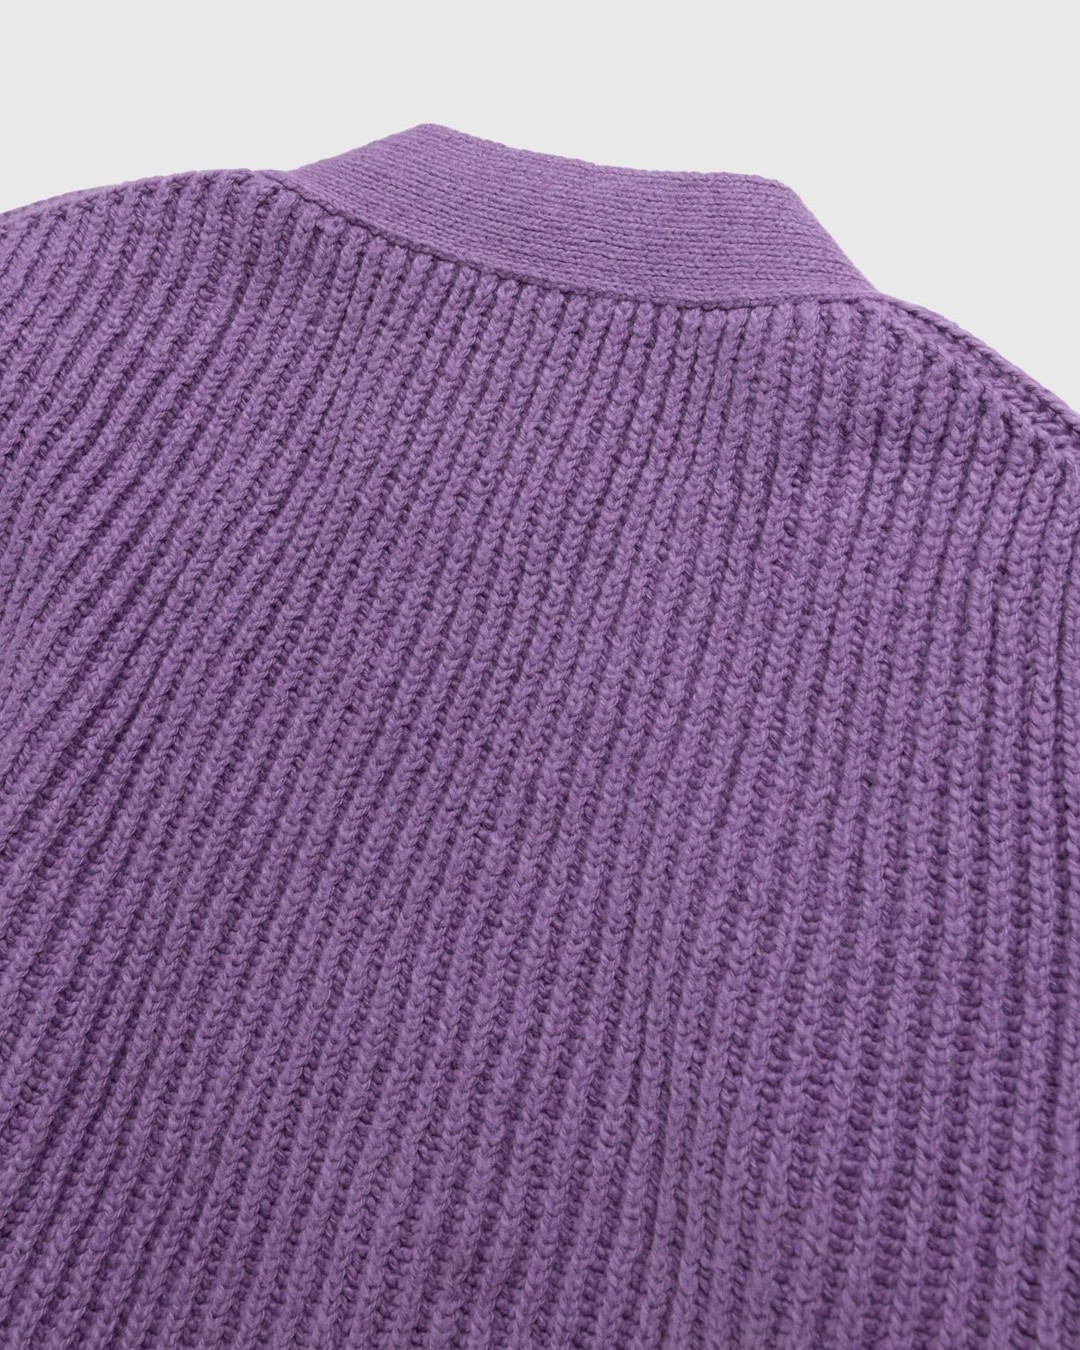 Jil Sander – Rib Knit Cardigan Medium Purple - Cardigans - Purple - Image 4